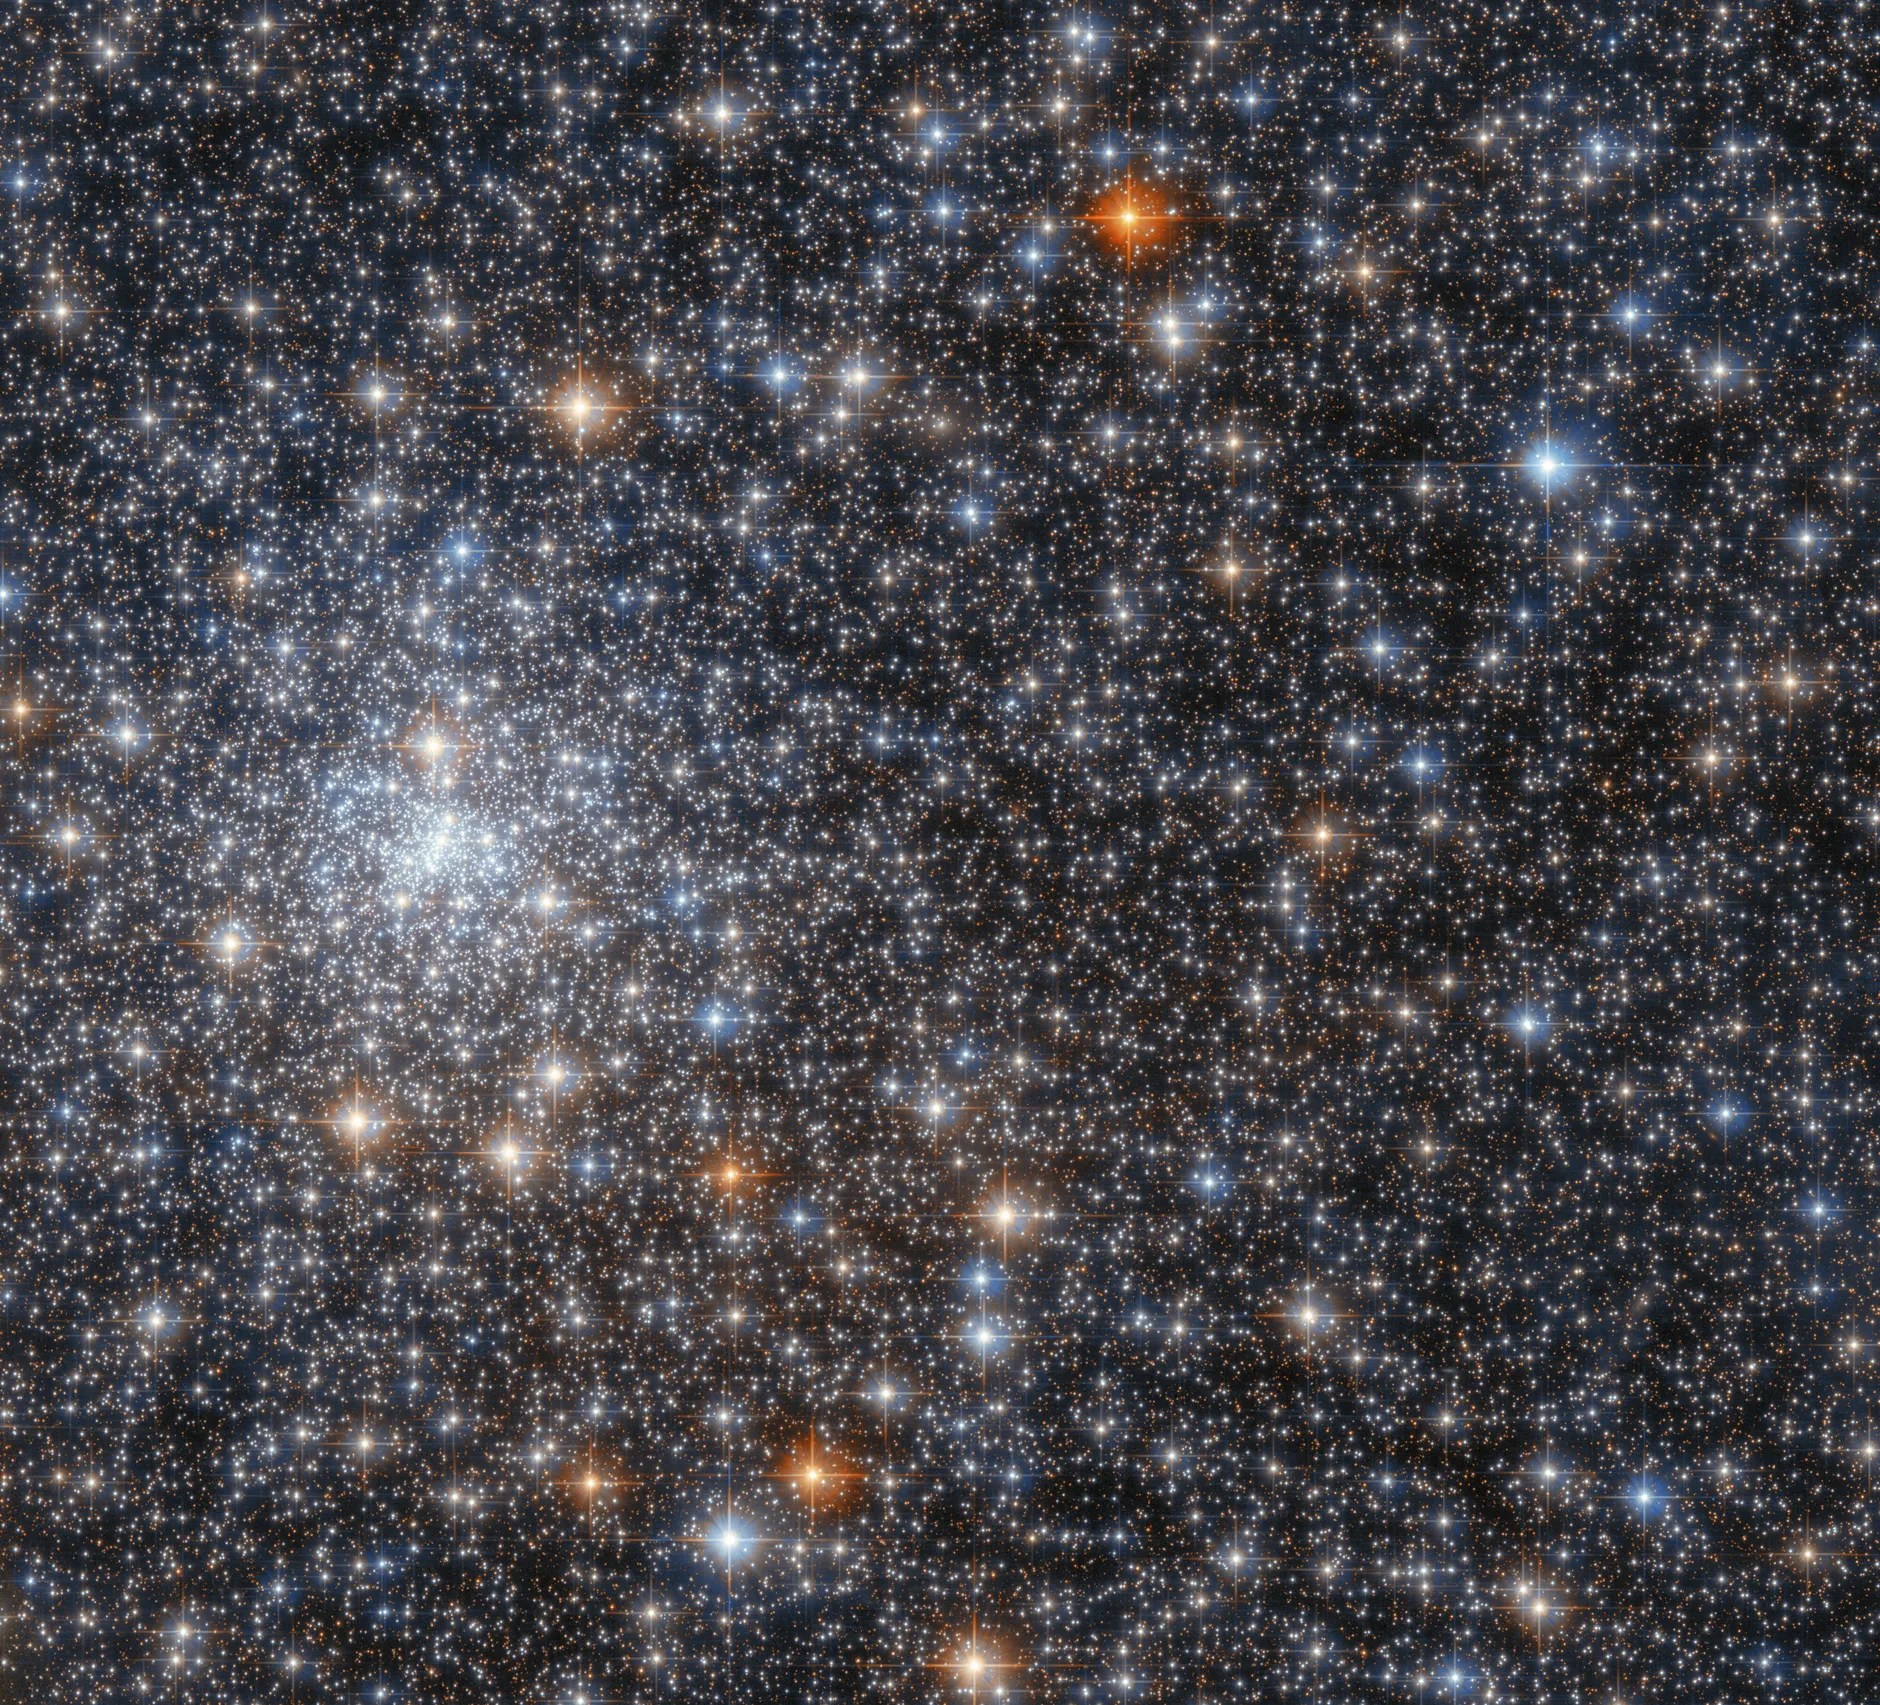 Bright cluster of blue-white stars at left center. frame filled with red, reddish-gold, blue, and blue-white stars